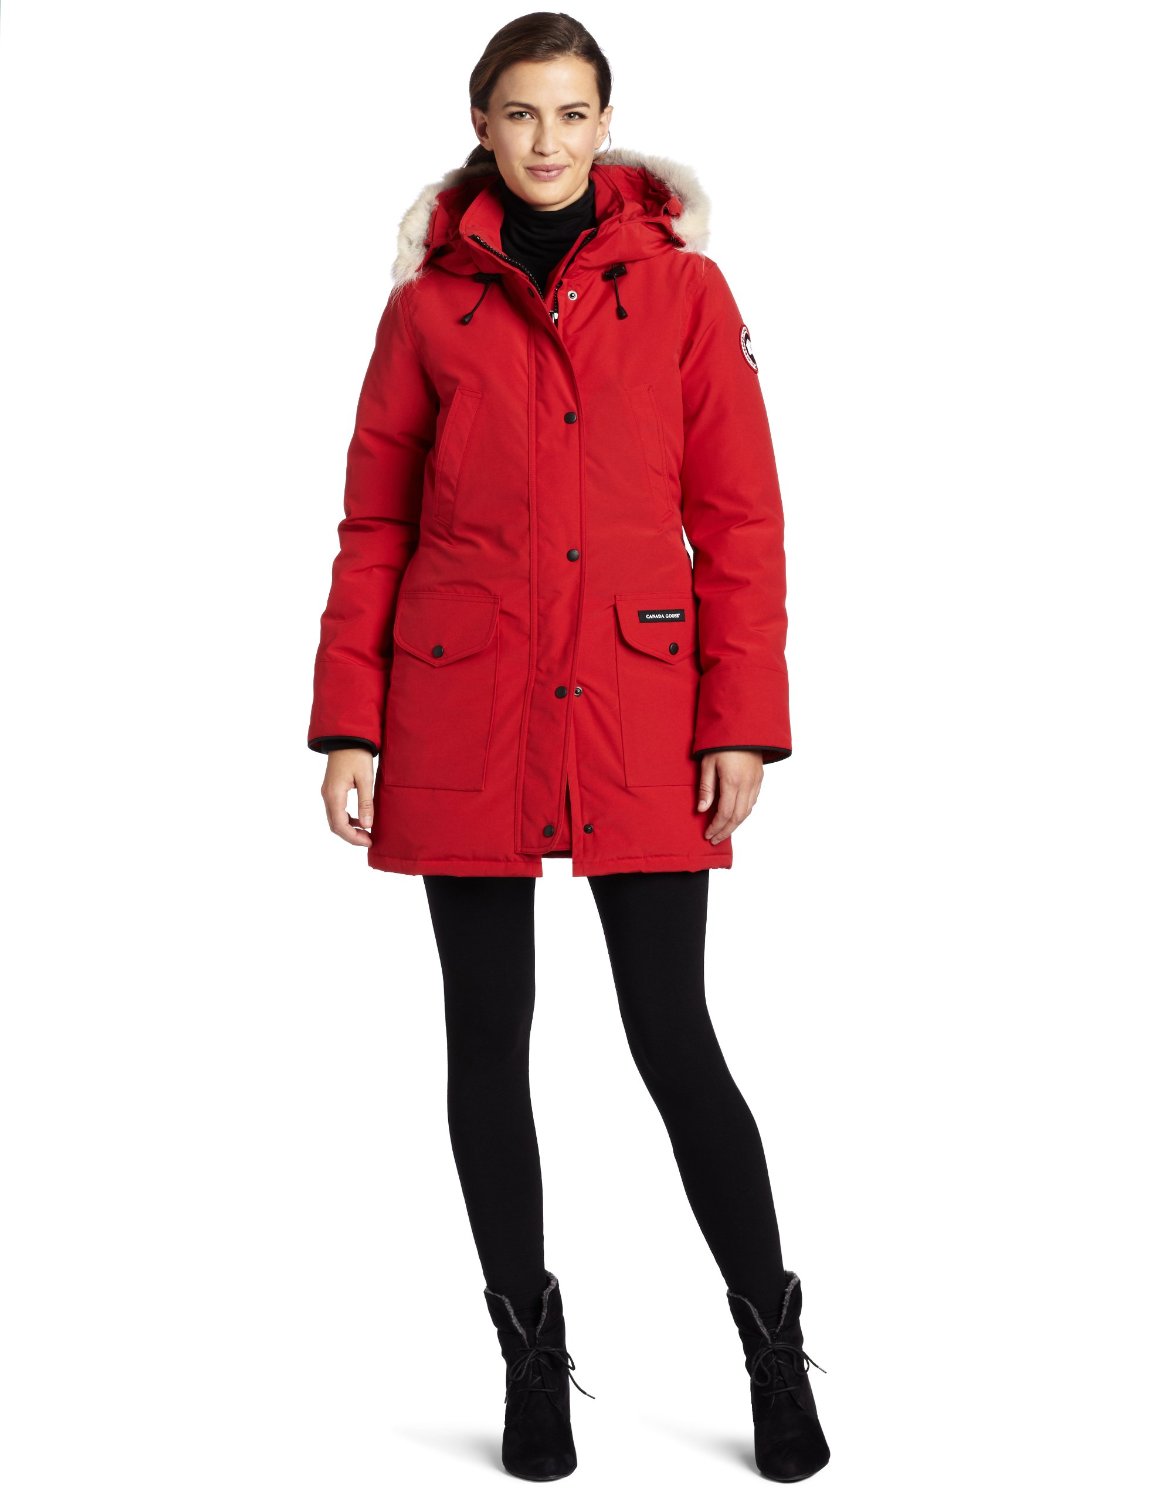 Canada Goose victoria parka sale fake - Canada Goose Trillium Parka best winter Parka? - My Fashion Wants